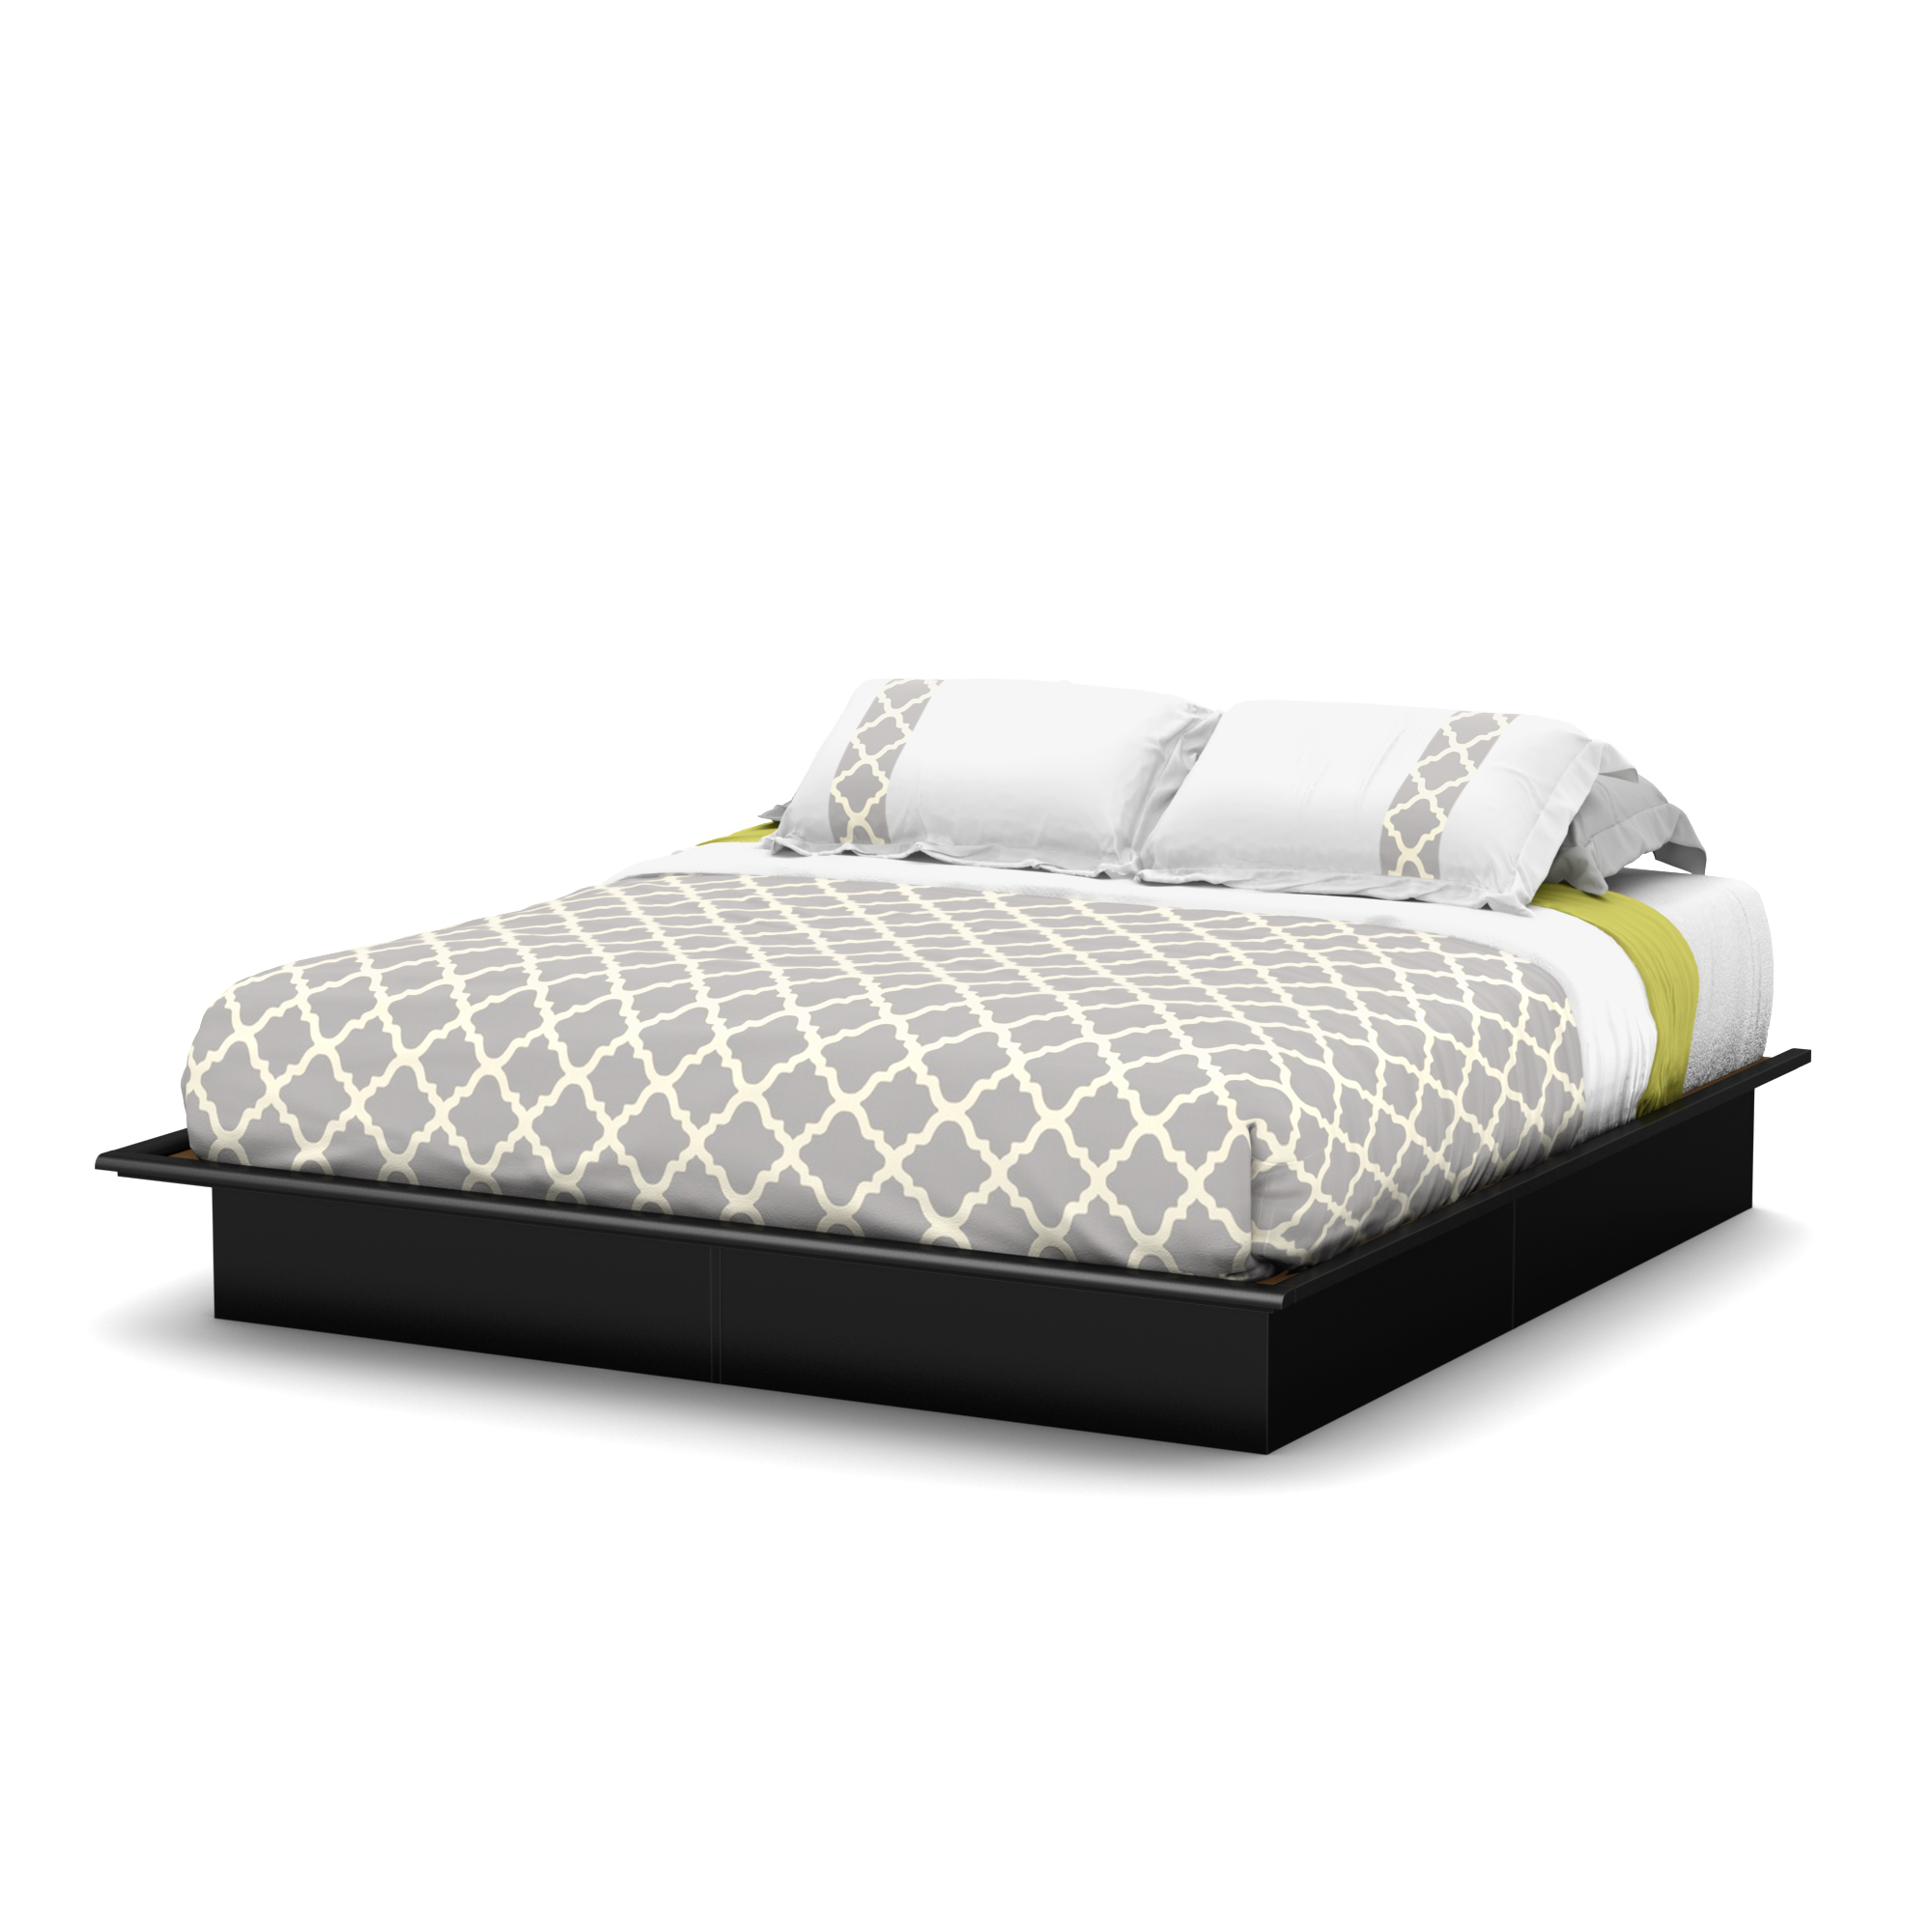 South Shore Basics Platform Bed with Molding, Multiple Sizes and Finishes - image 3 of 7